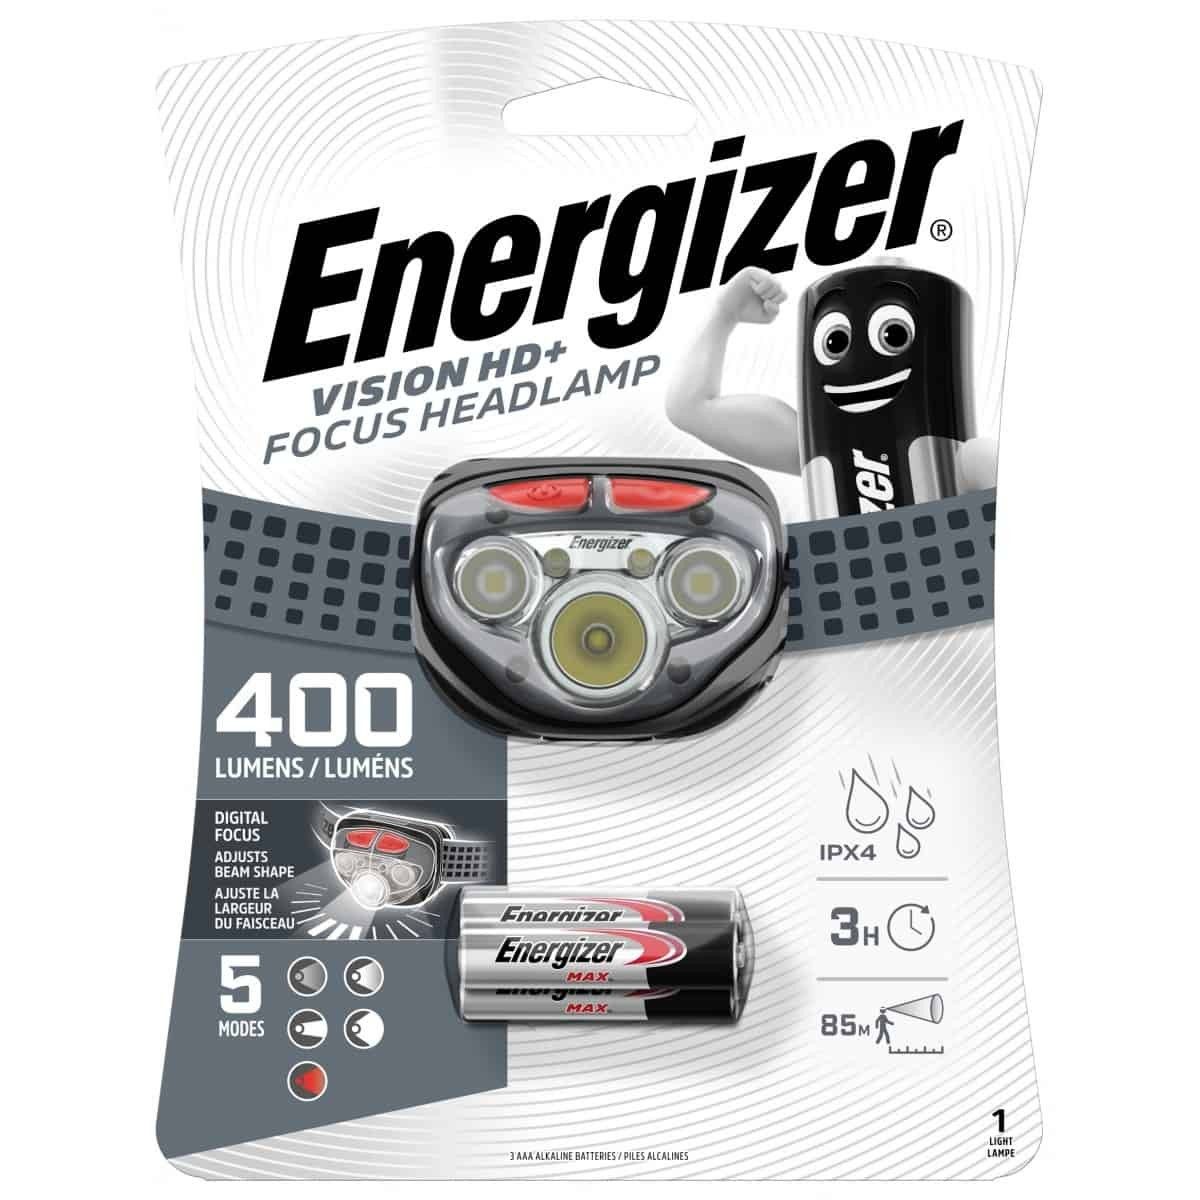 Energizer Vision HD+ Focus Pannlampa